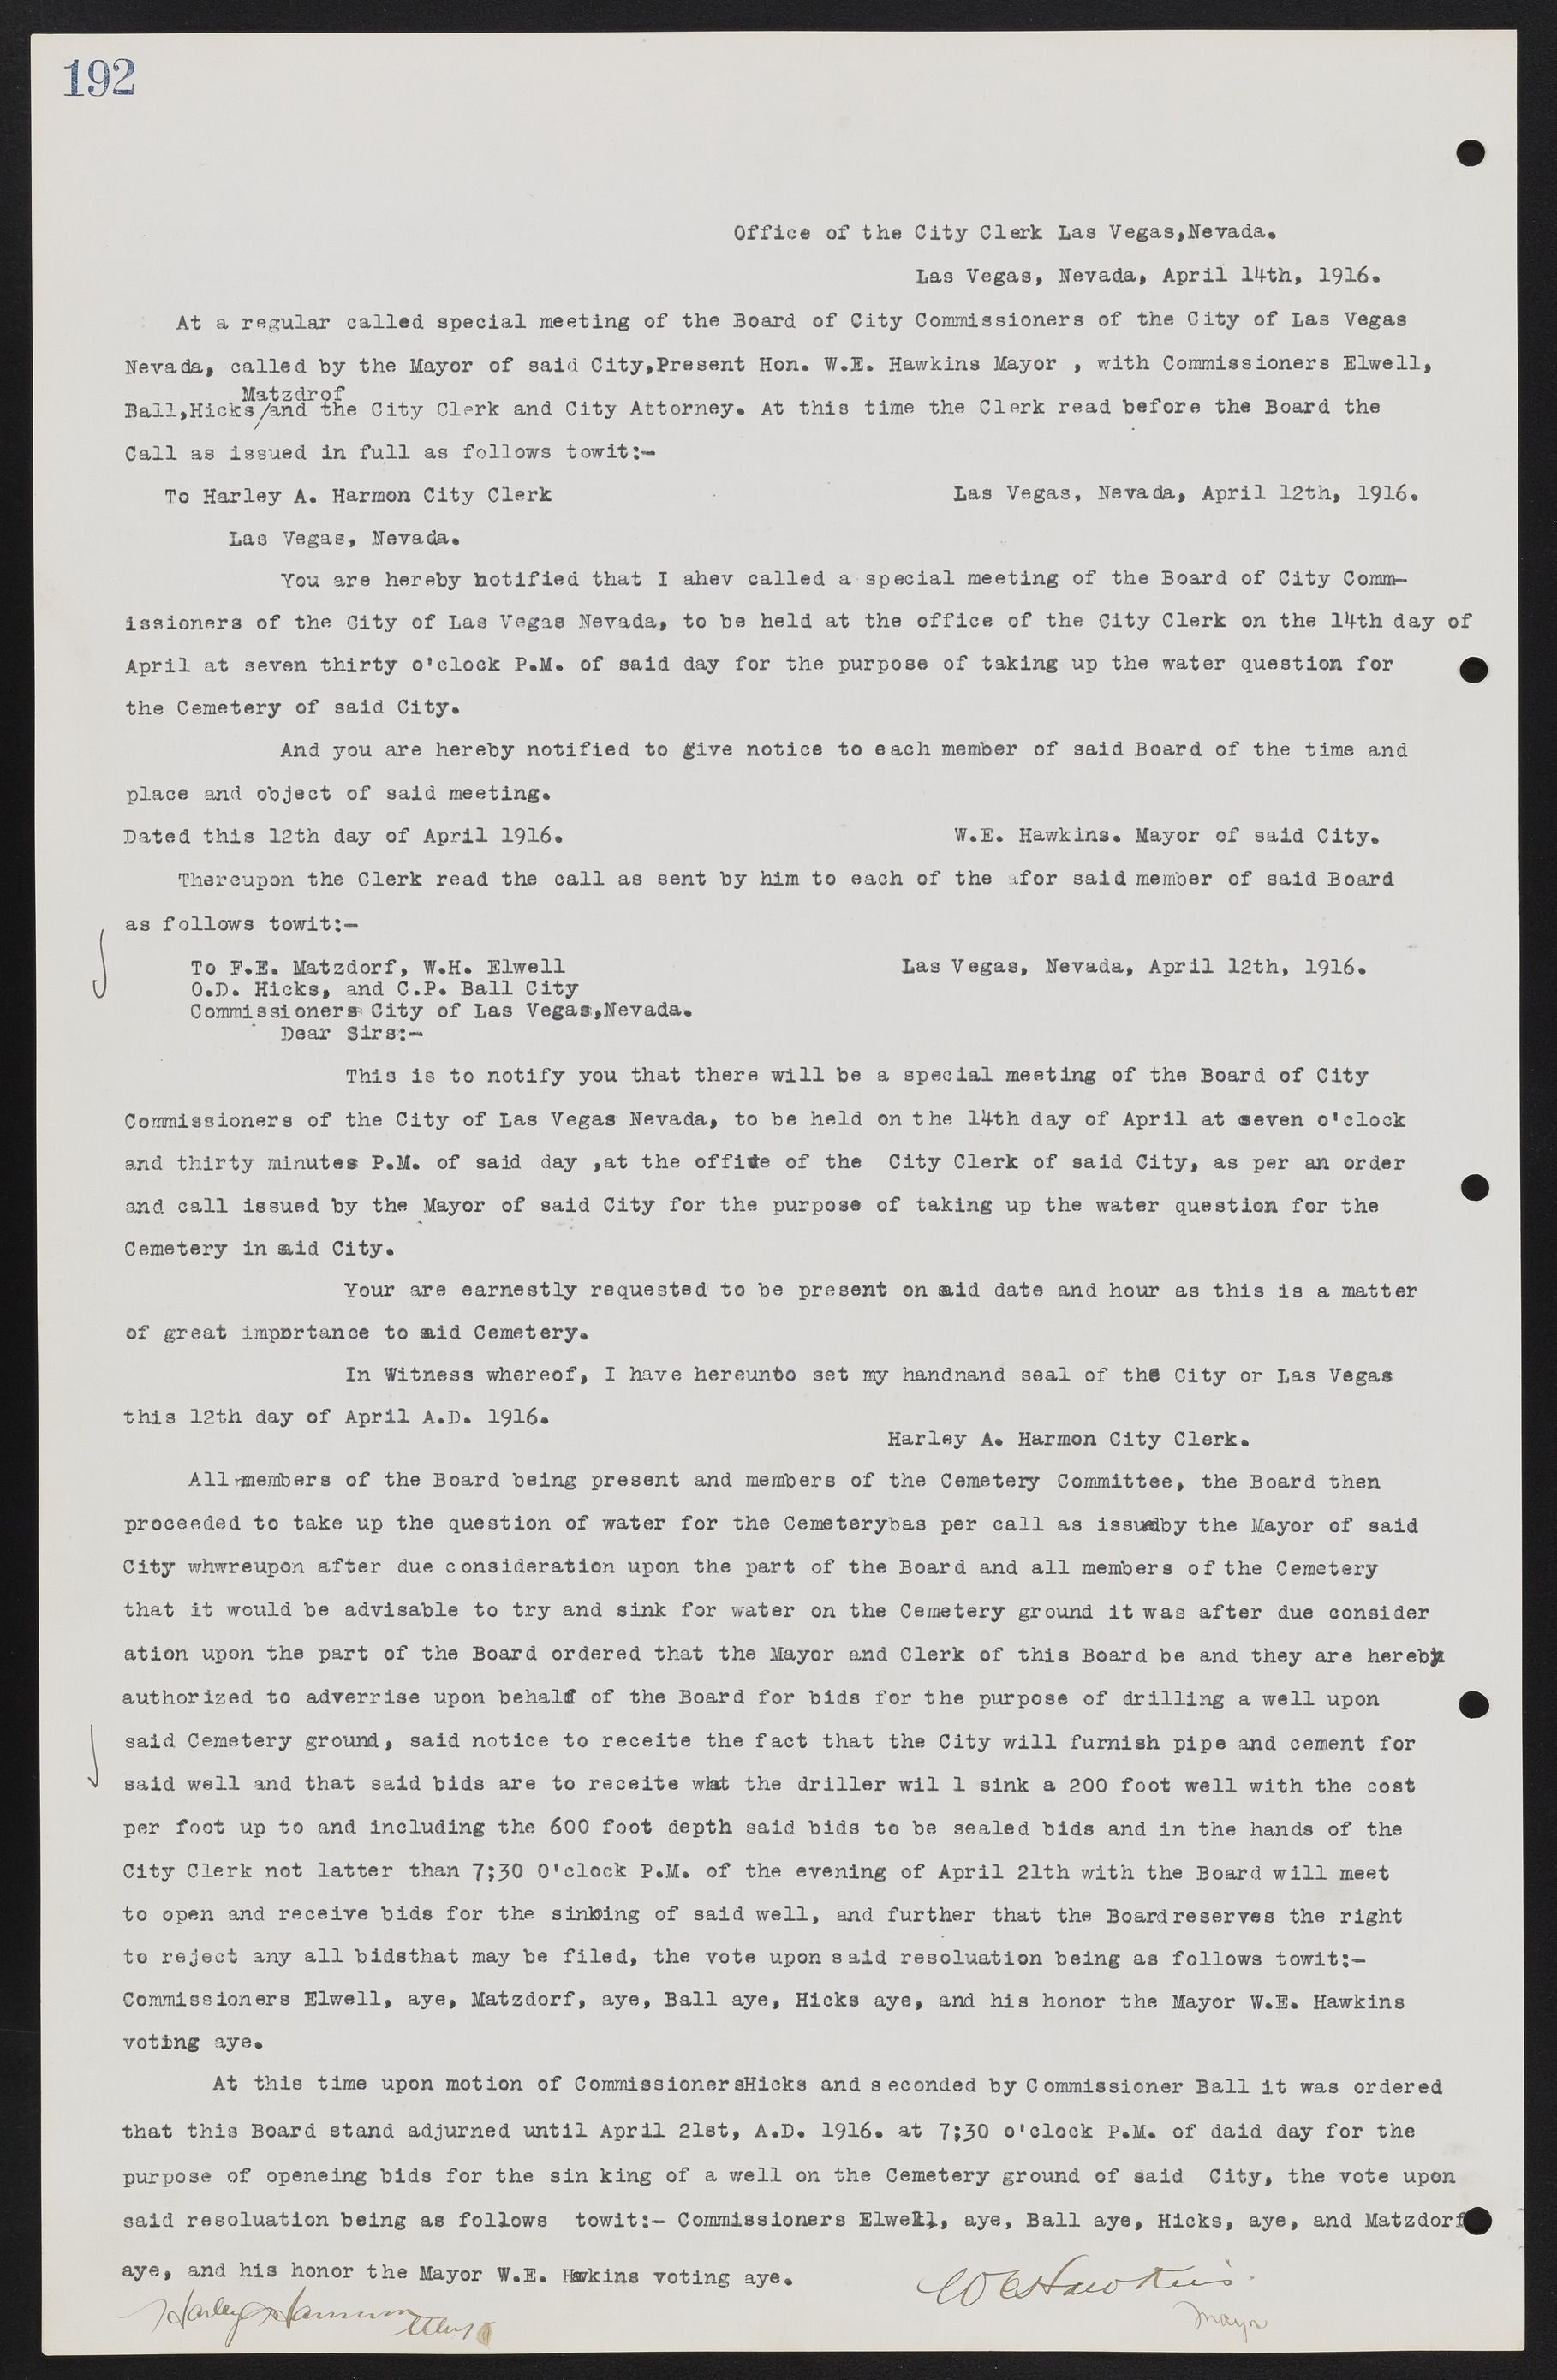 Las Vegas City Commission Minutes, June 22, 1911 to February 7, 1922, lvc000001-208